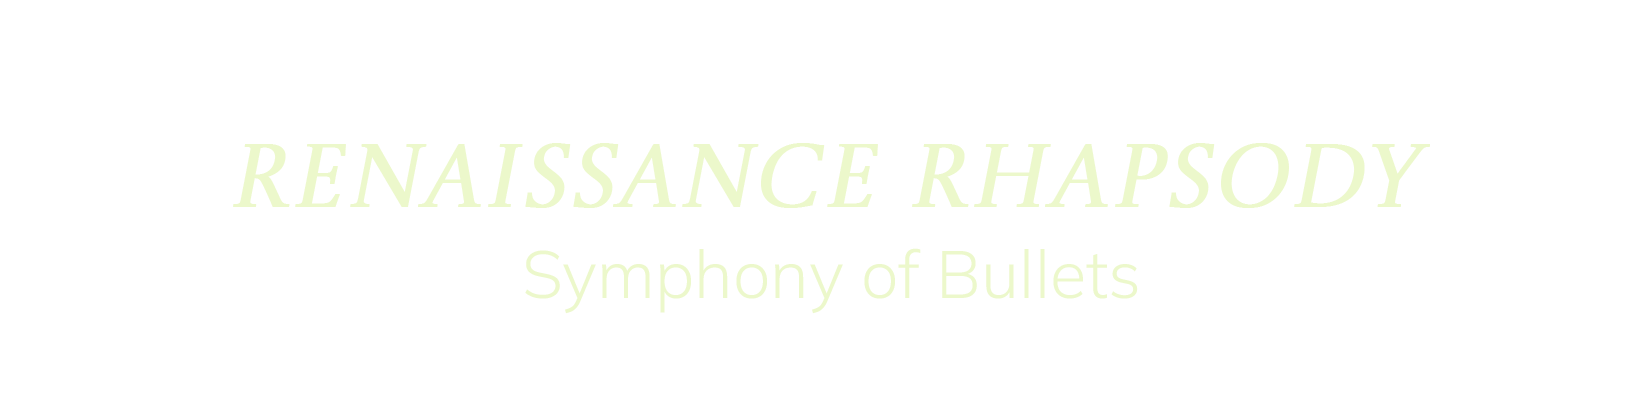 Renaissance Rhapsody: Symphony of Bullets